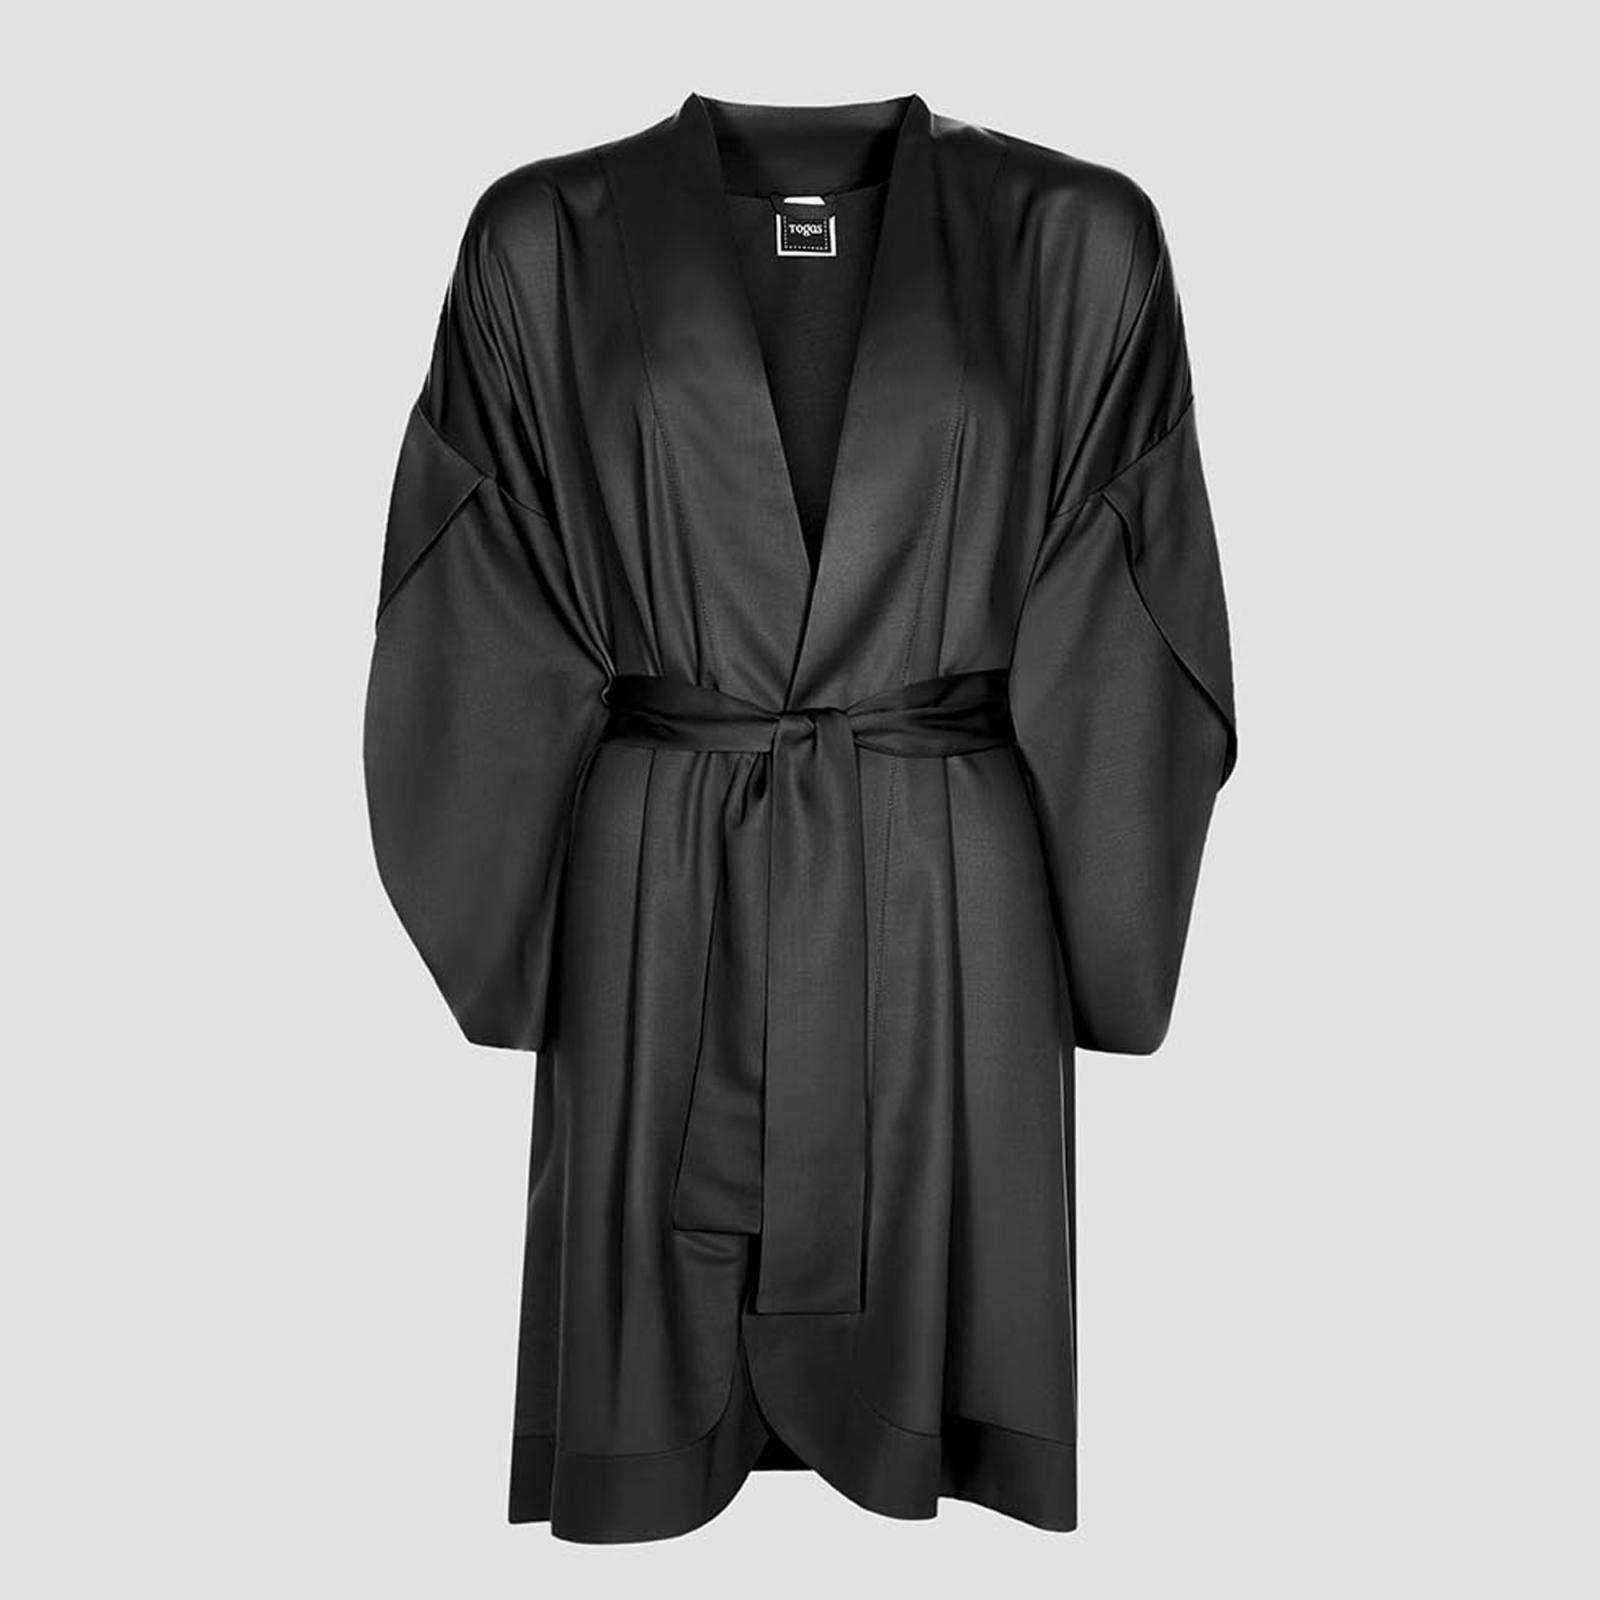 фото Халат-кимоно короткое togas наоми чёрное xl (50)